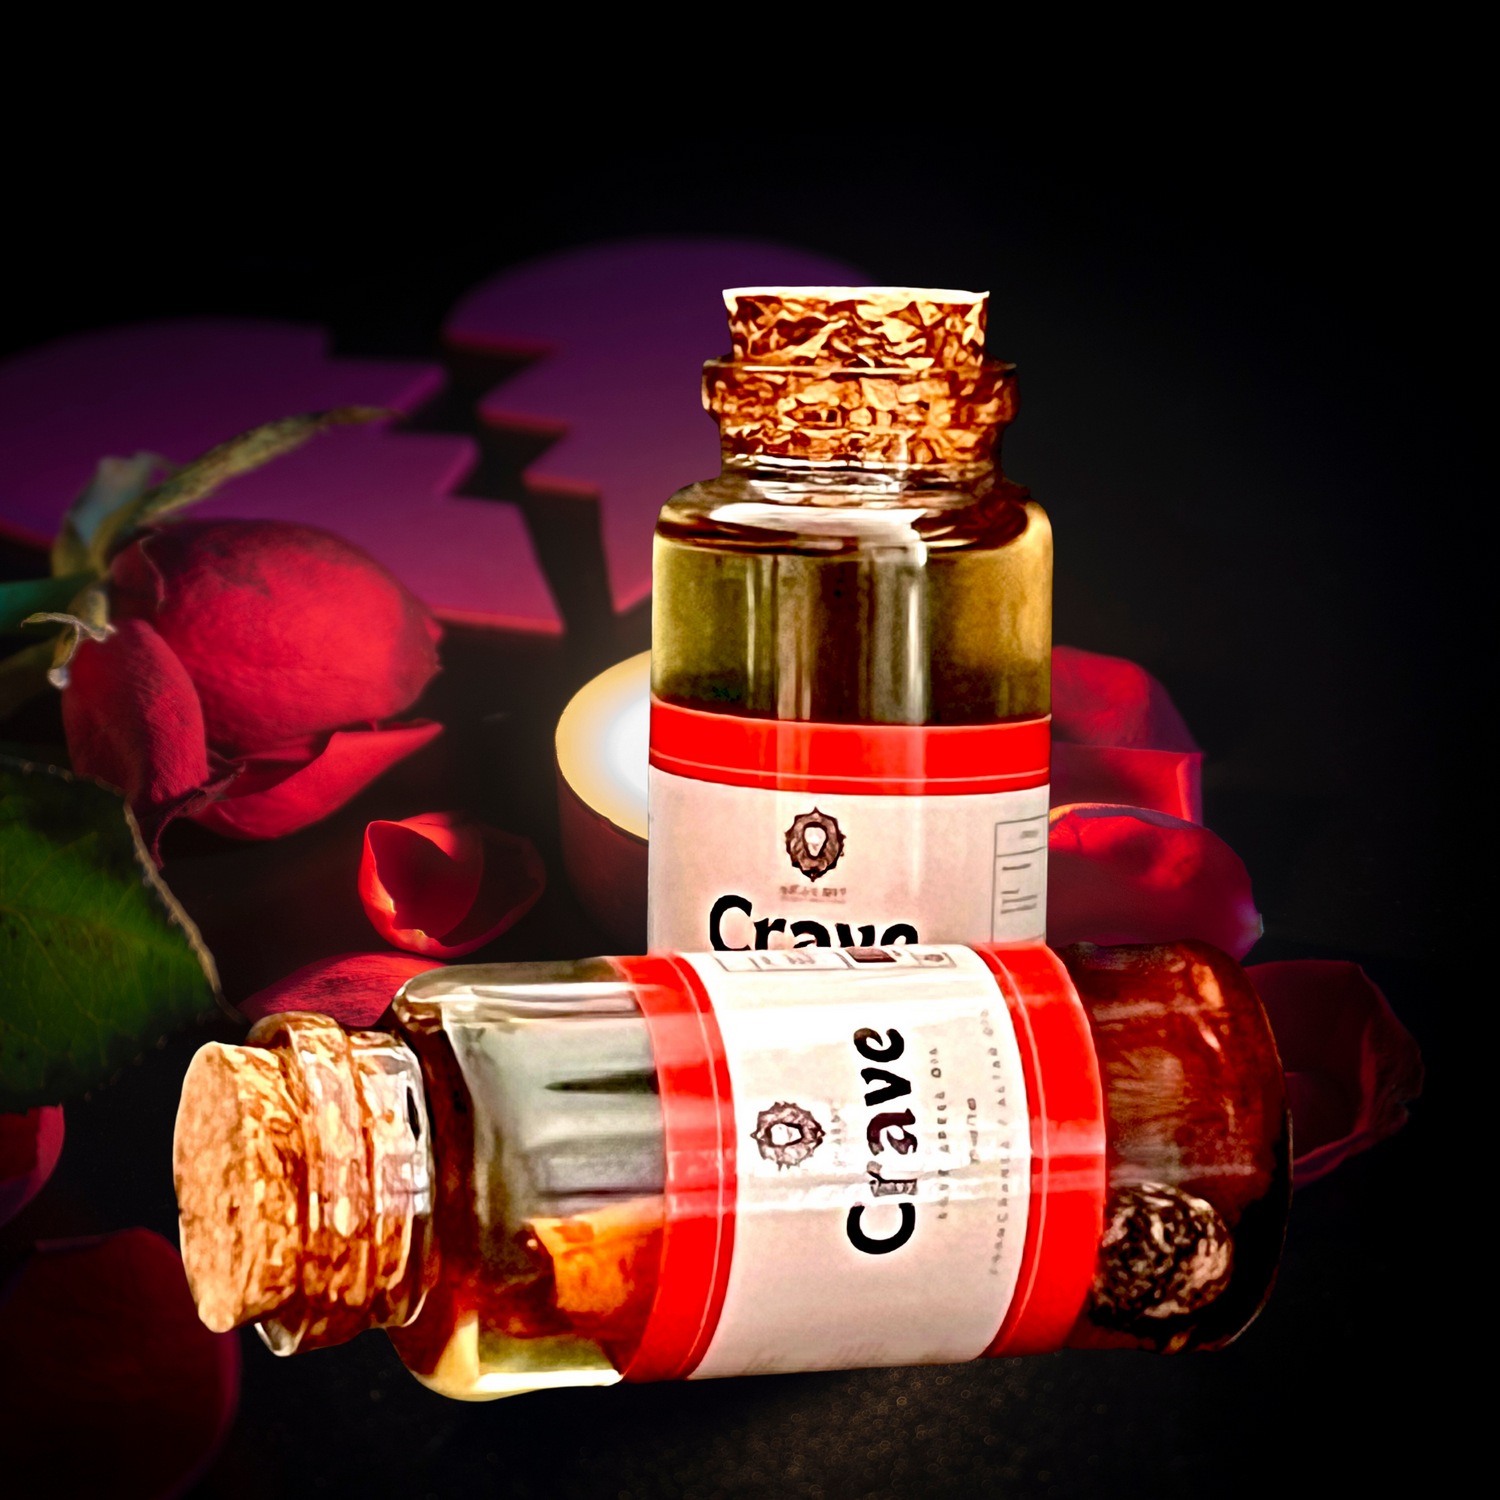 Crave - Love Spelled Oil